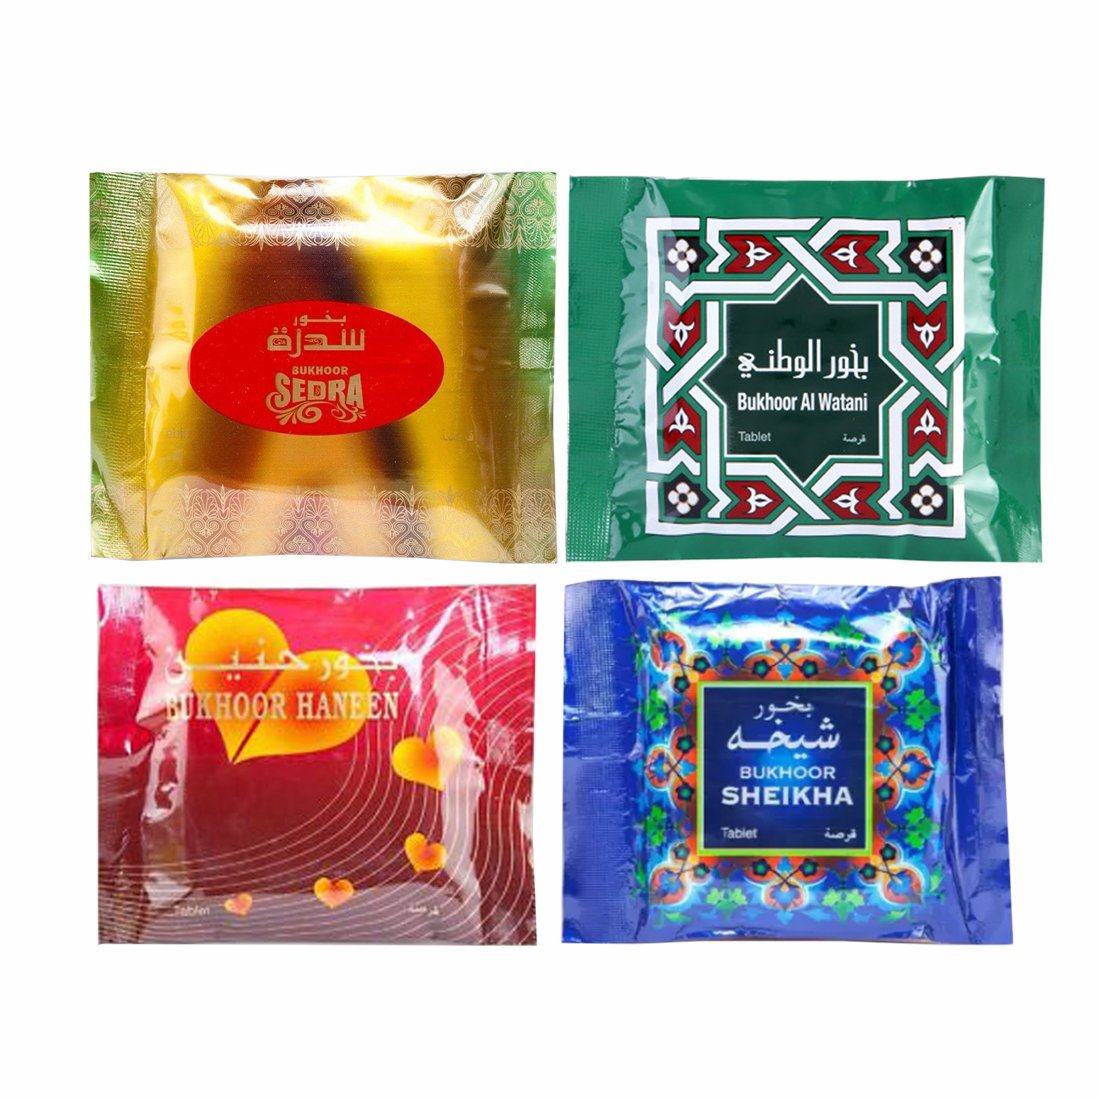 Al Haramain Bukhoor Haneen, Sheikha, Sedra & Watani For Bakhoor Burners Paste Pack of 4